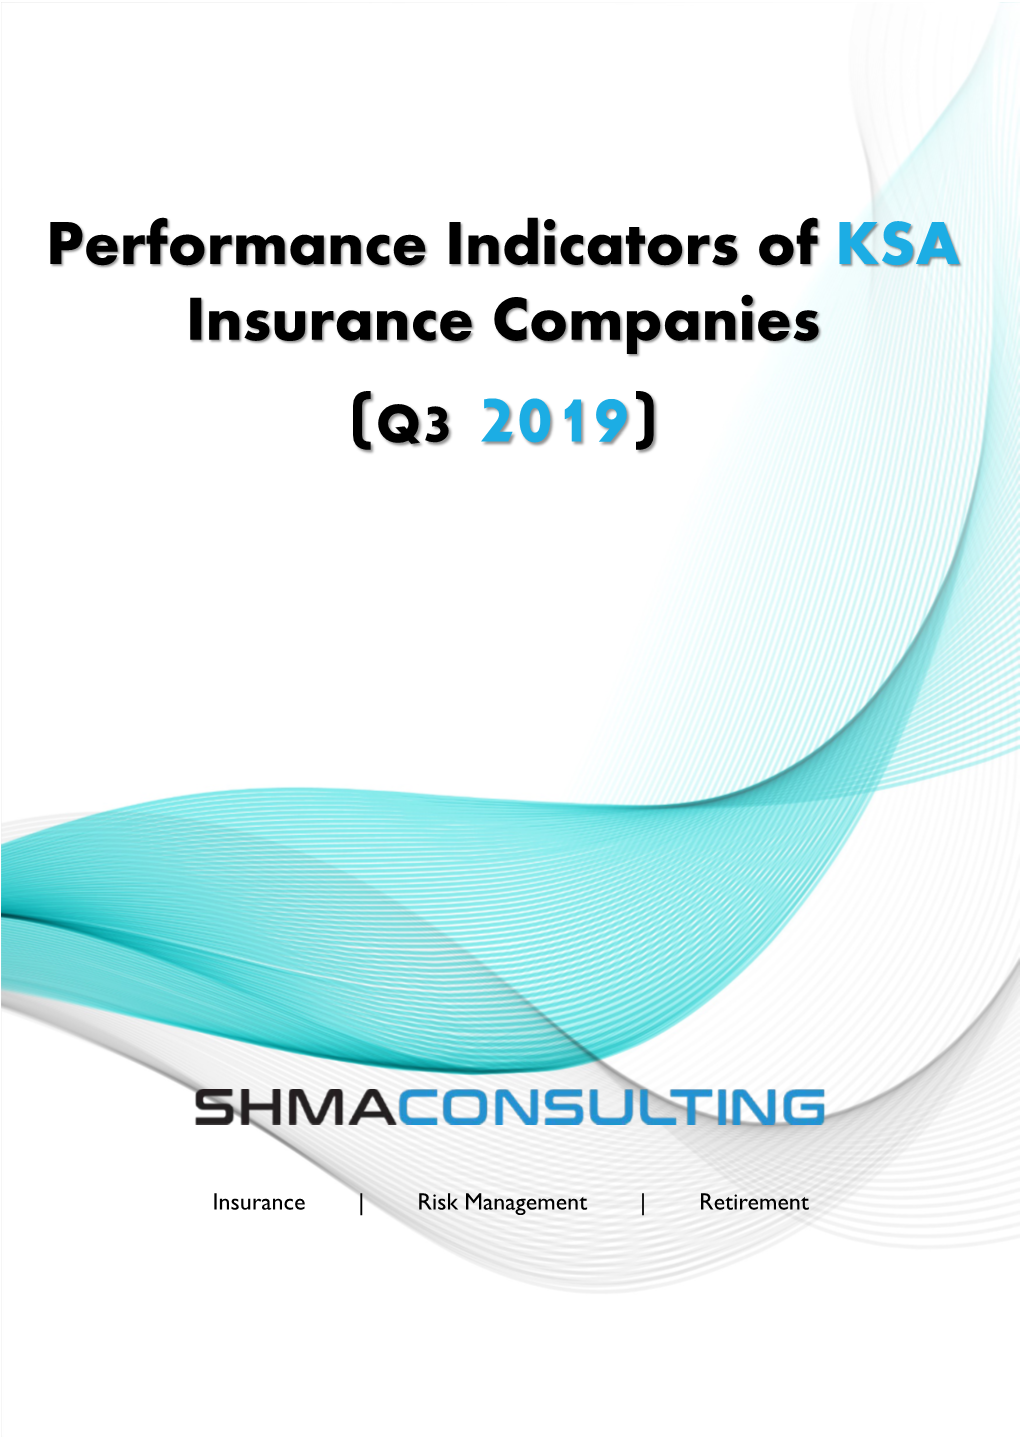 Performance Indicators of KSA Insurance Companies (Q3 2019)